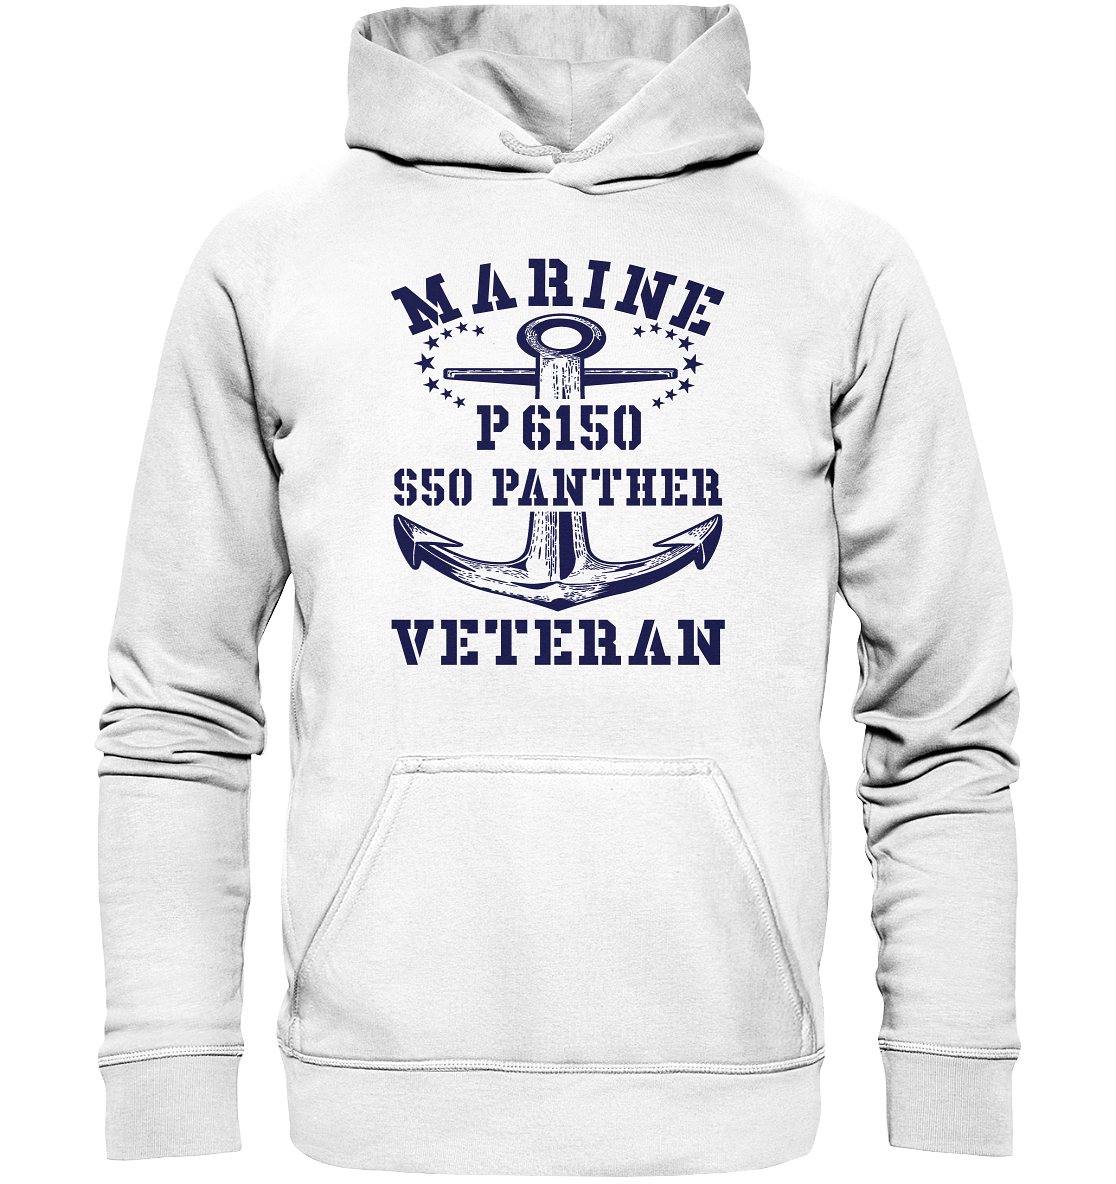 P6150 S50 PANTHER Marine Veteran - Basic Unisex Hoodie